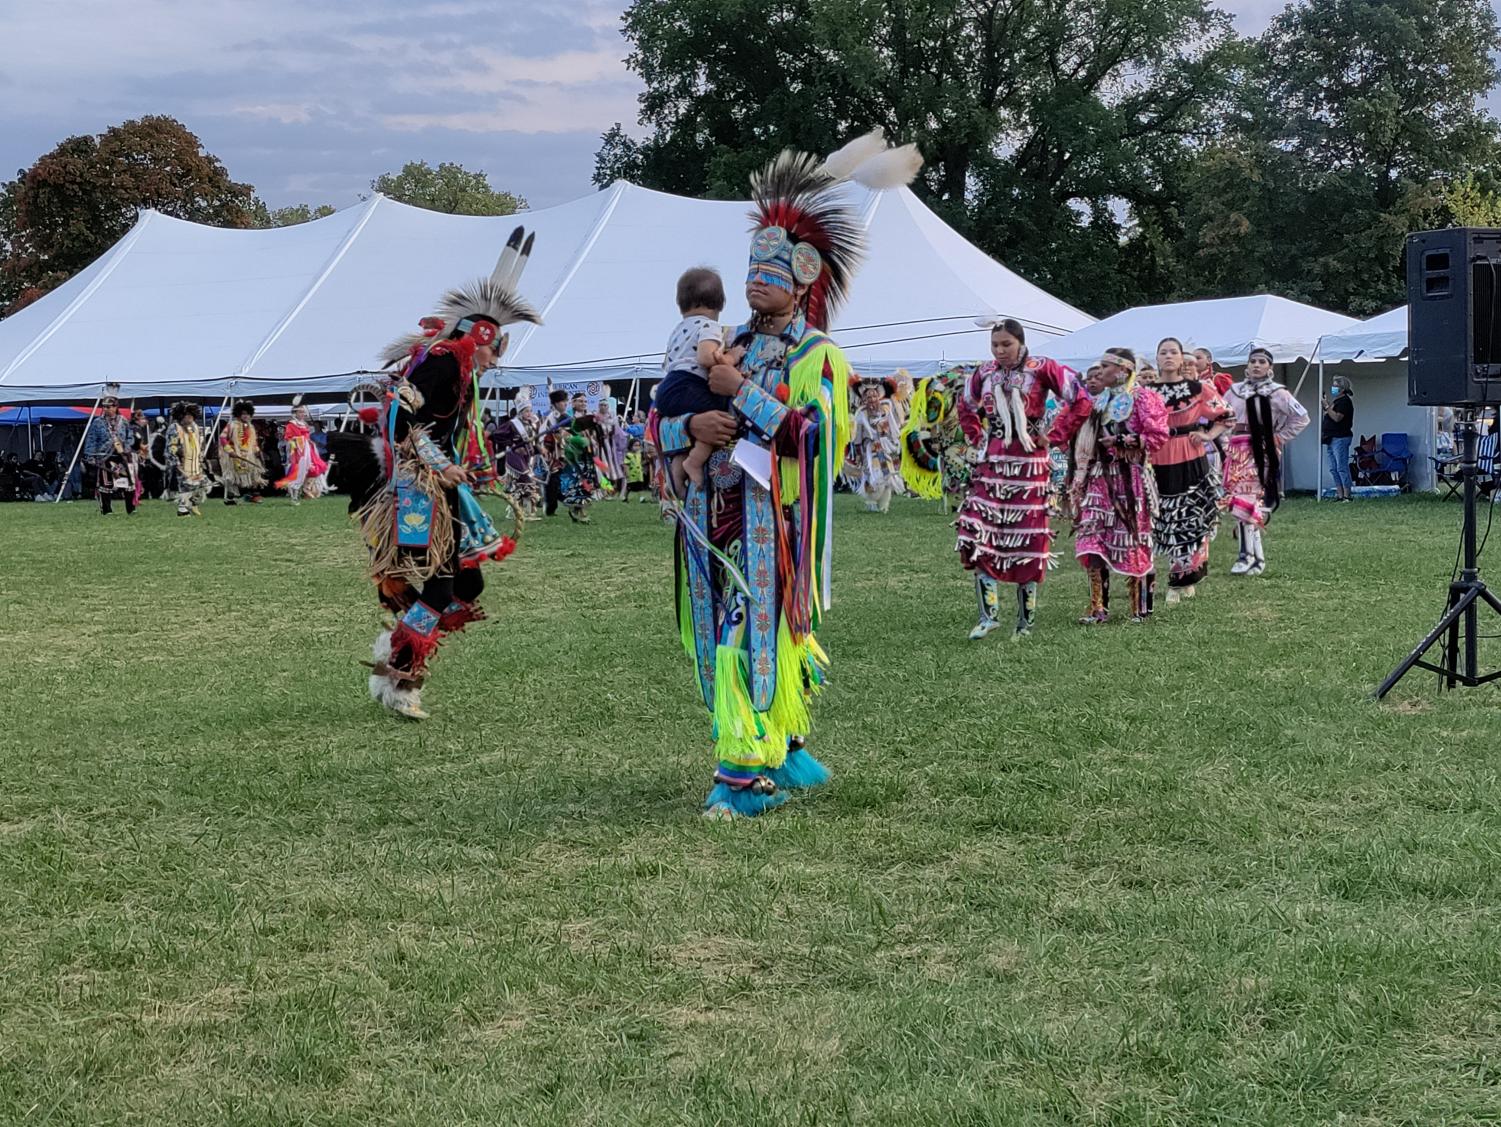 68th Annual Chicago Powwow invites tribal reunion, educates nonnatives